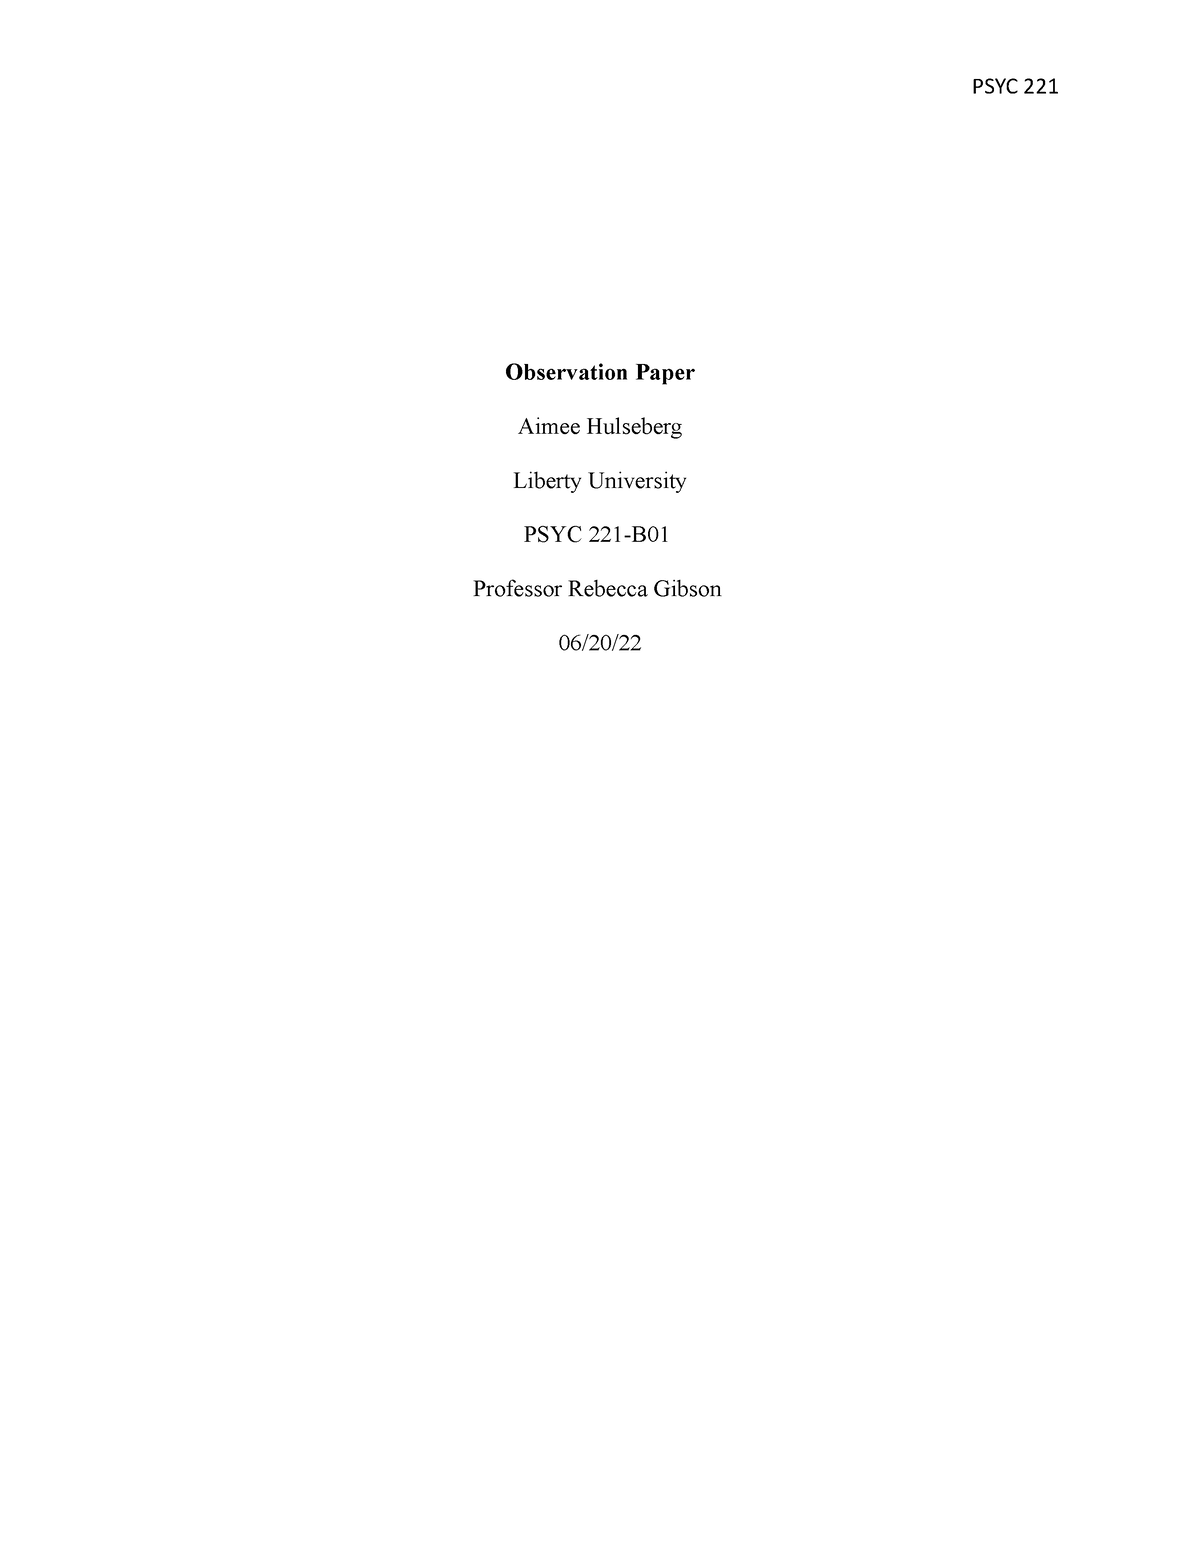 Observation Paper - Observation Paper Aimee Hulseberg Liberty ...